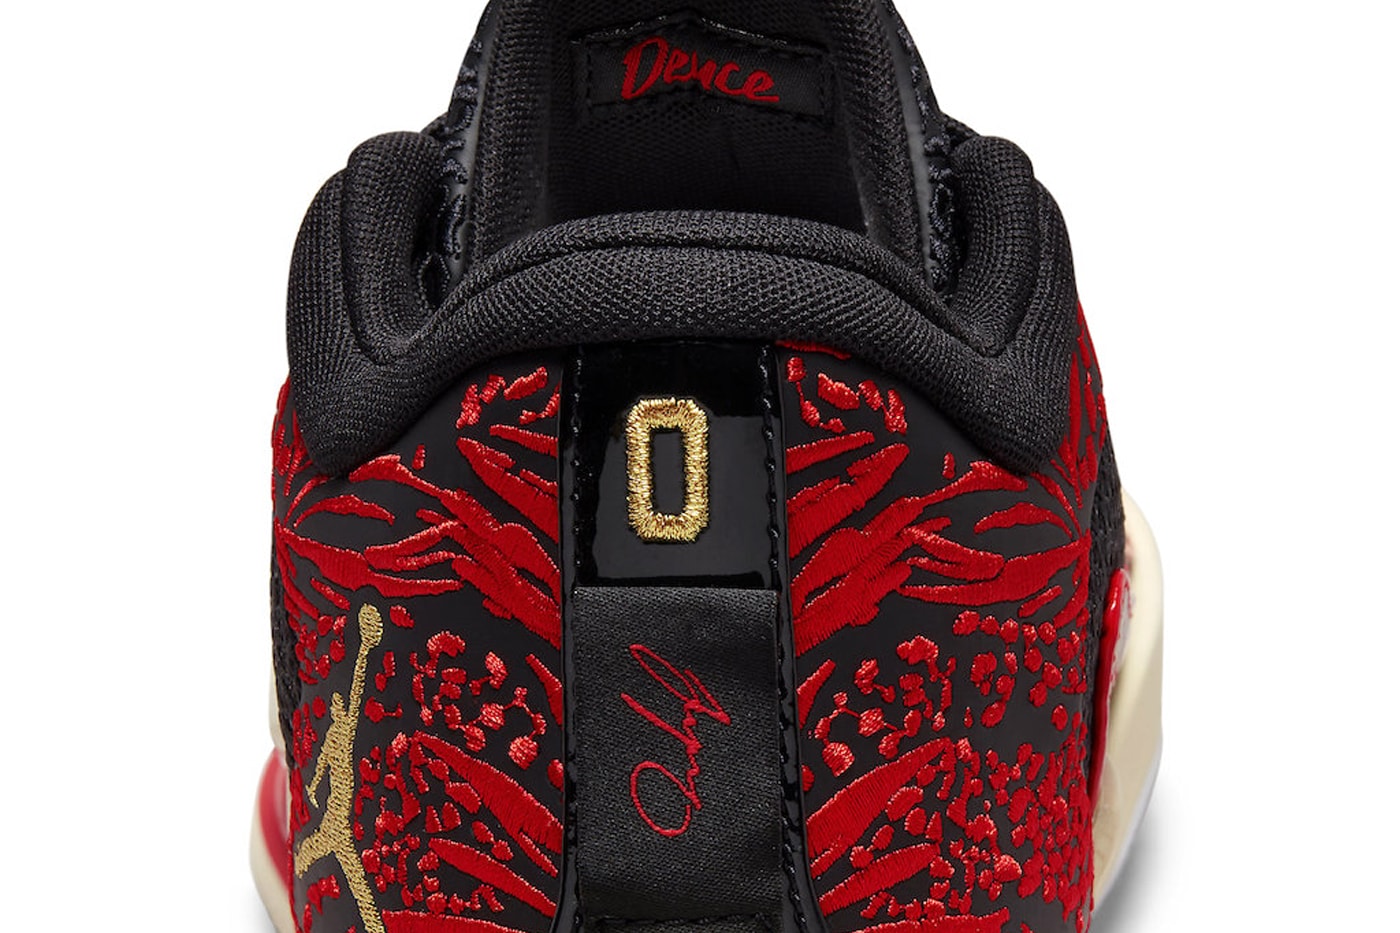 Tatum's signature Jordan shoes get early release in Boston